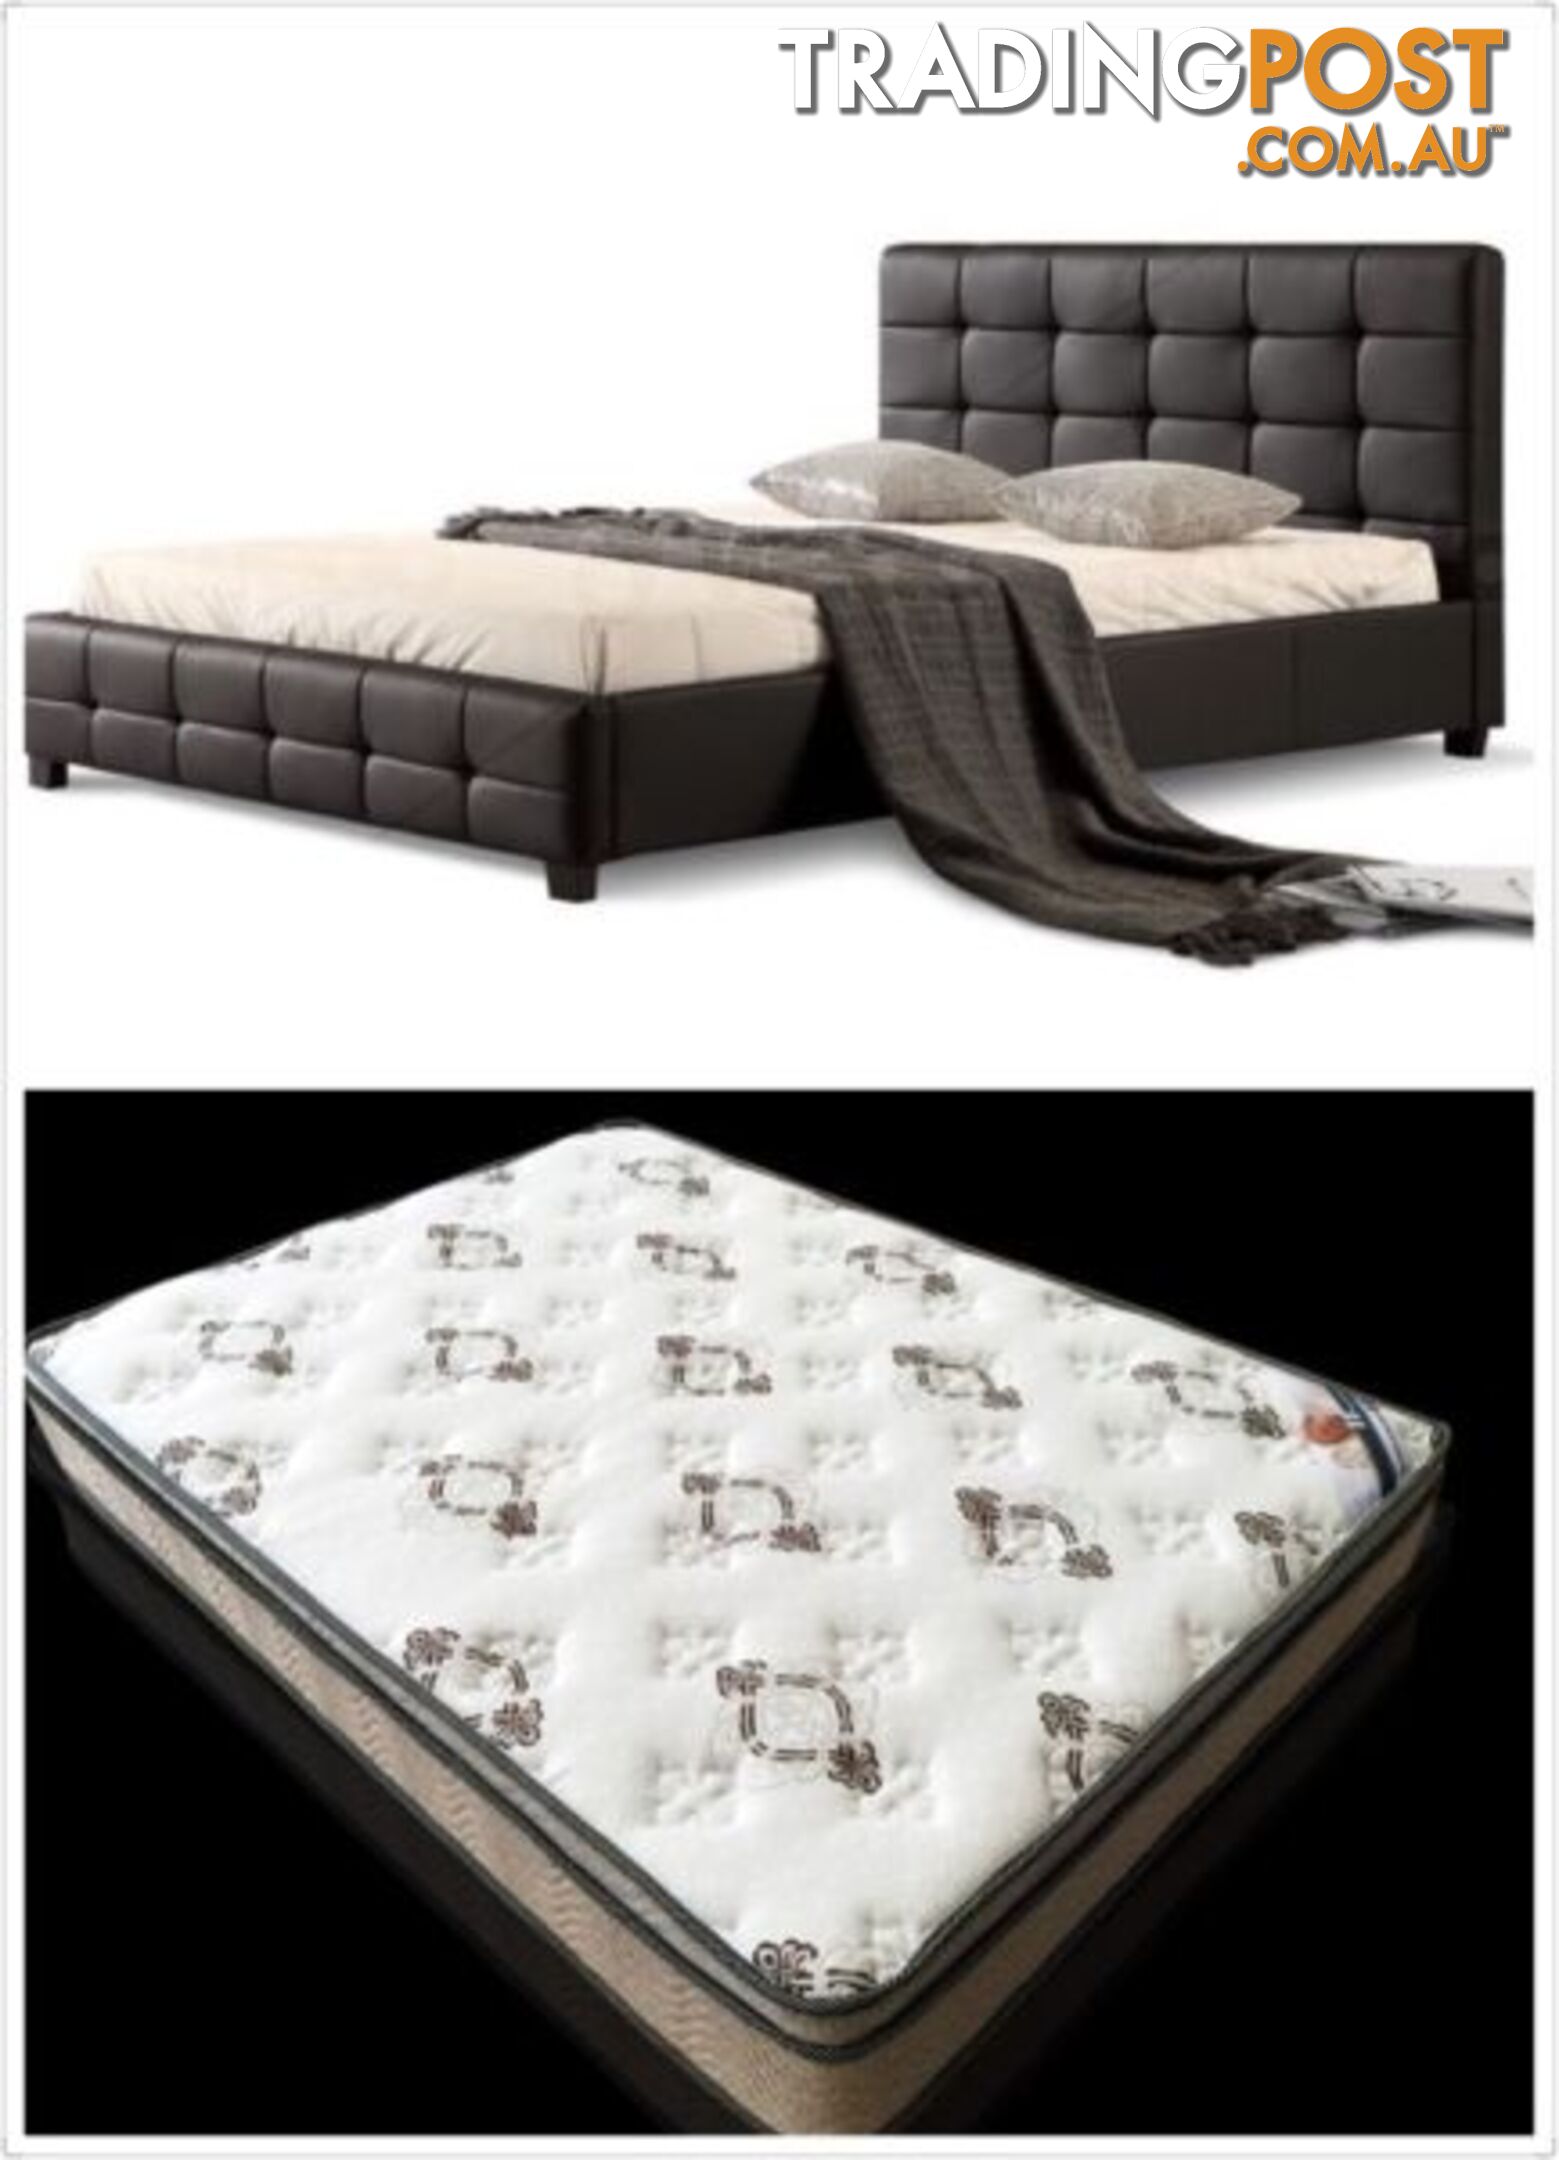 WarehouseSpecial 002 PU bed + Eurotop Mattress Double/Queen/King